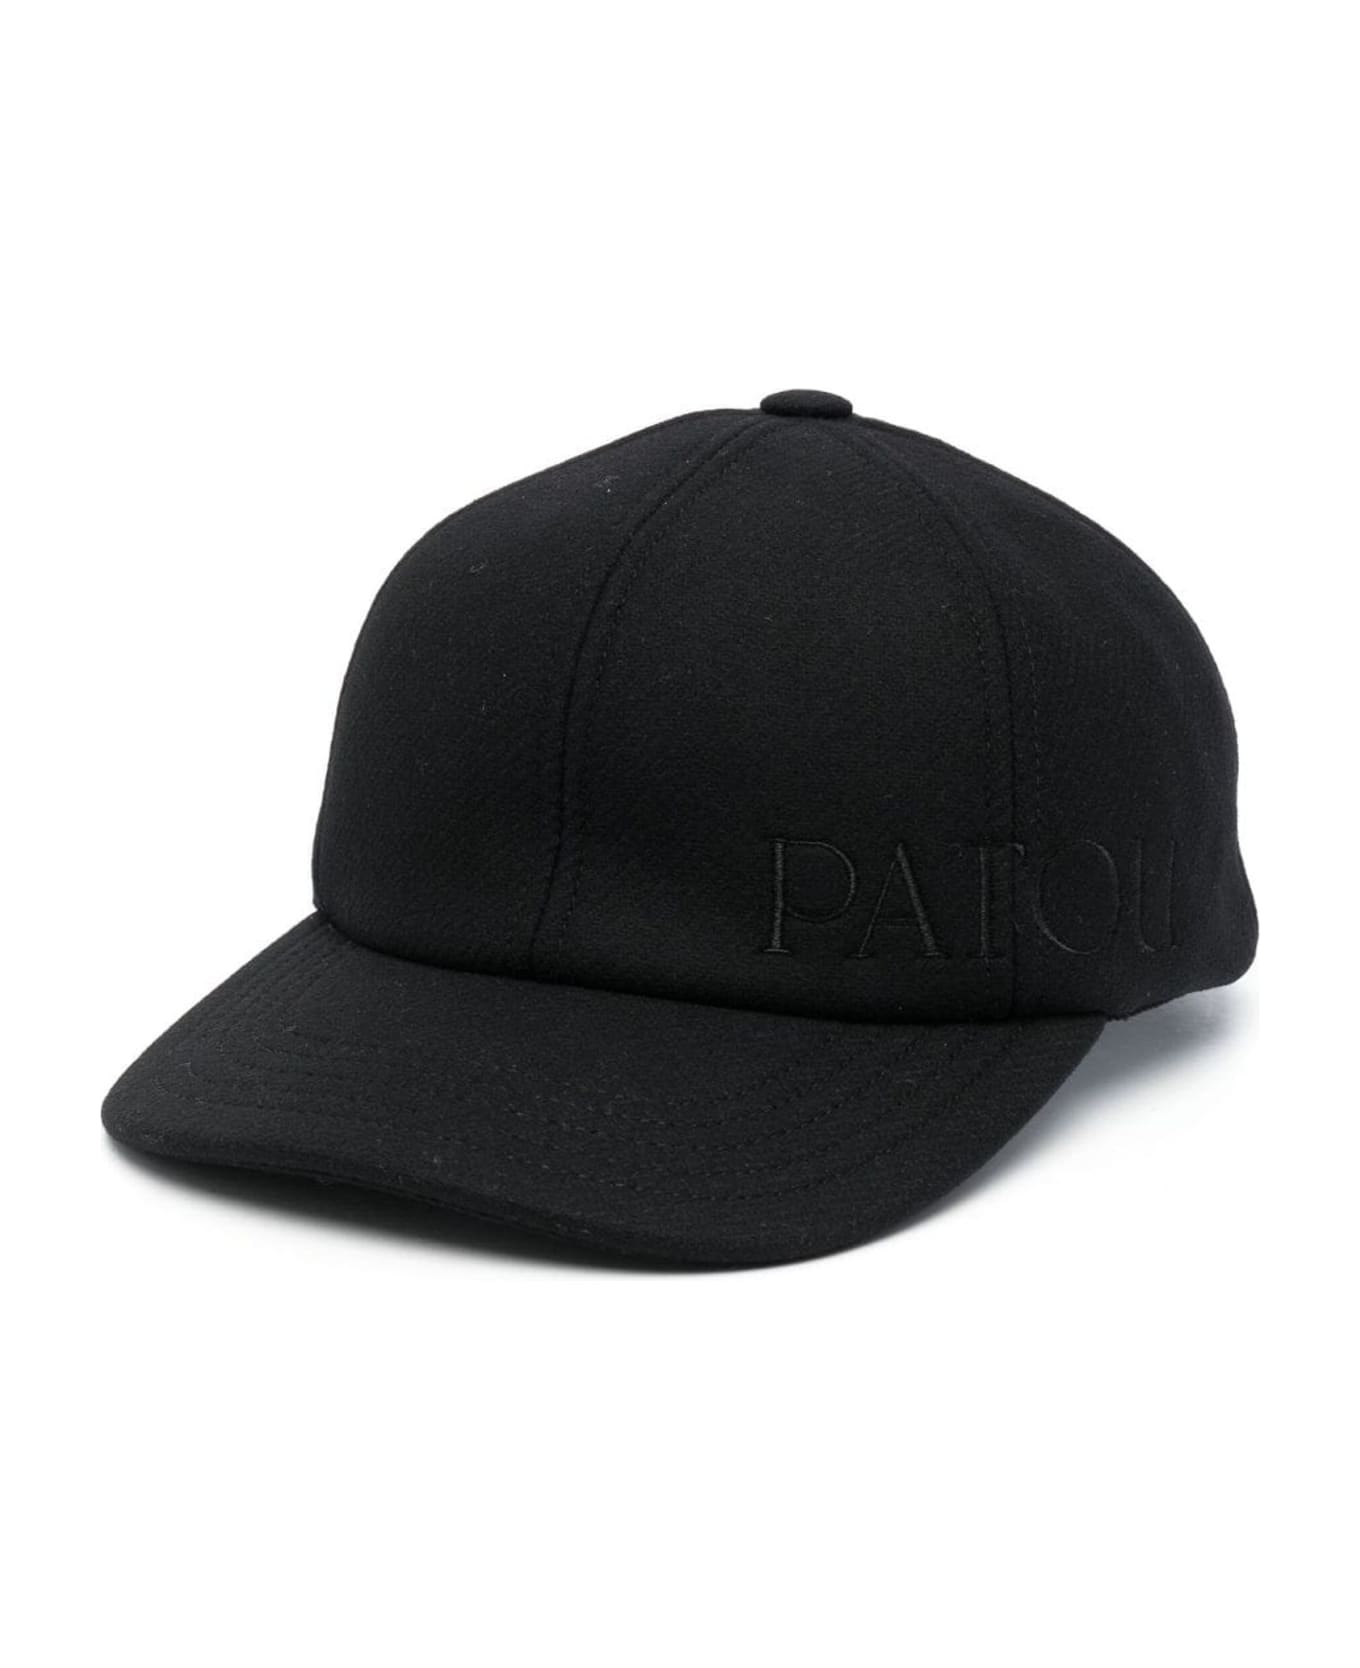 Patou Black Virgin Wool Blend Cap